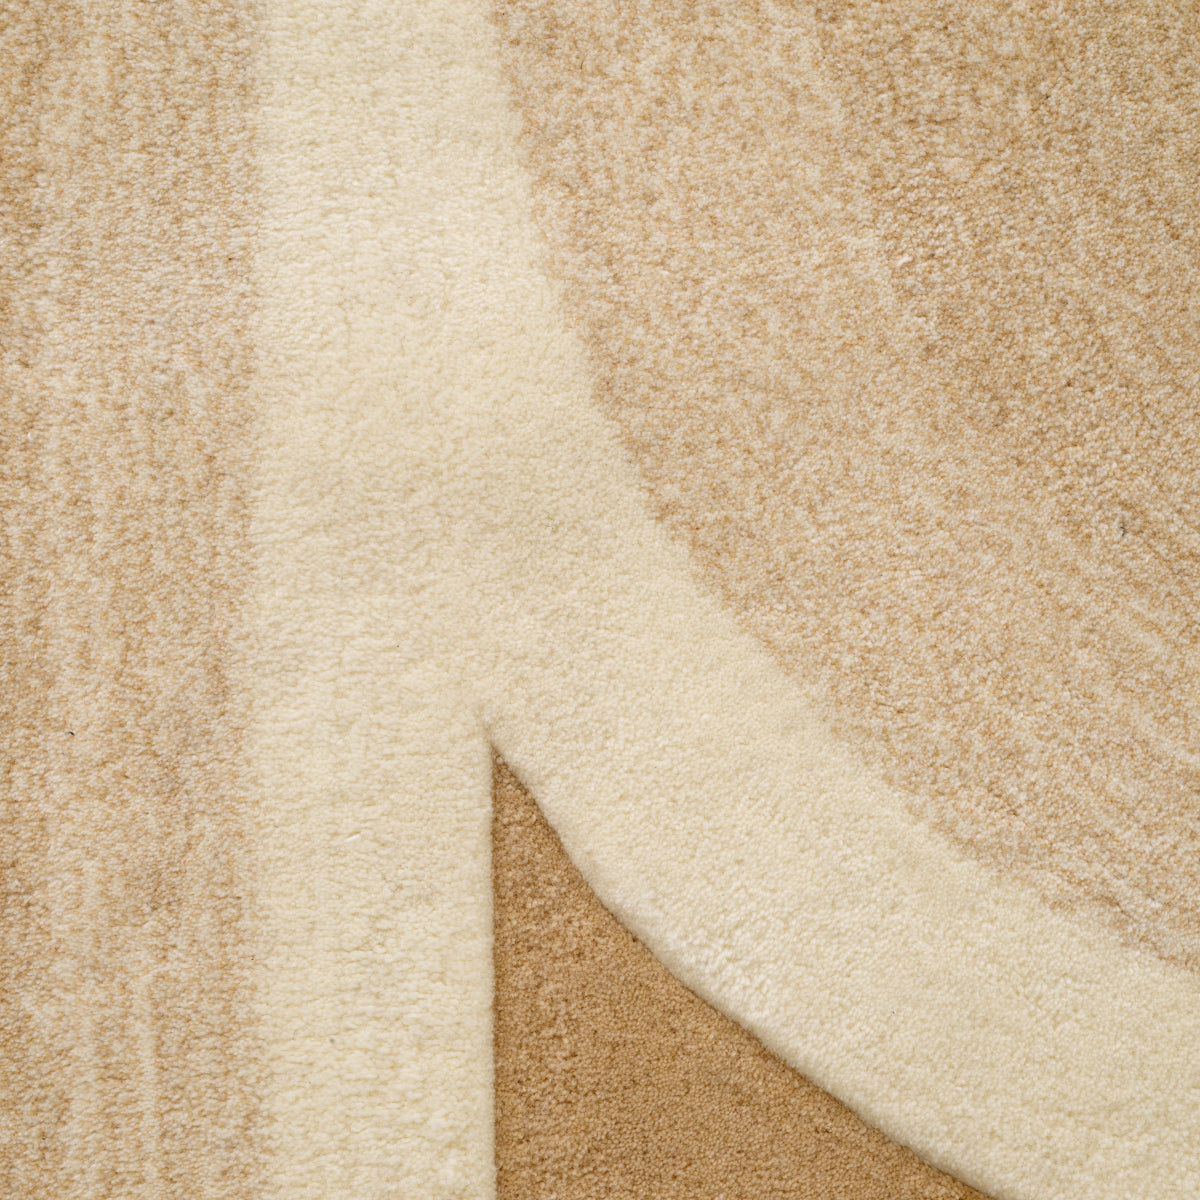 Vloerkleed Eichholtz Marsala ivoor carpet